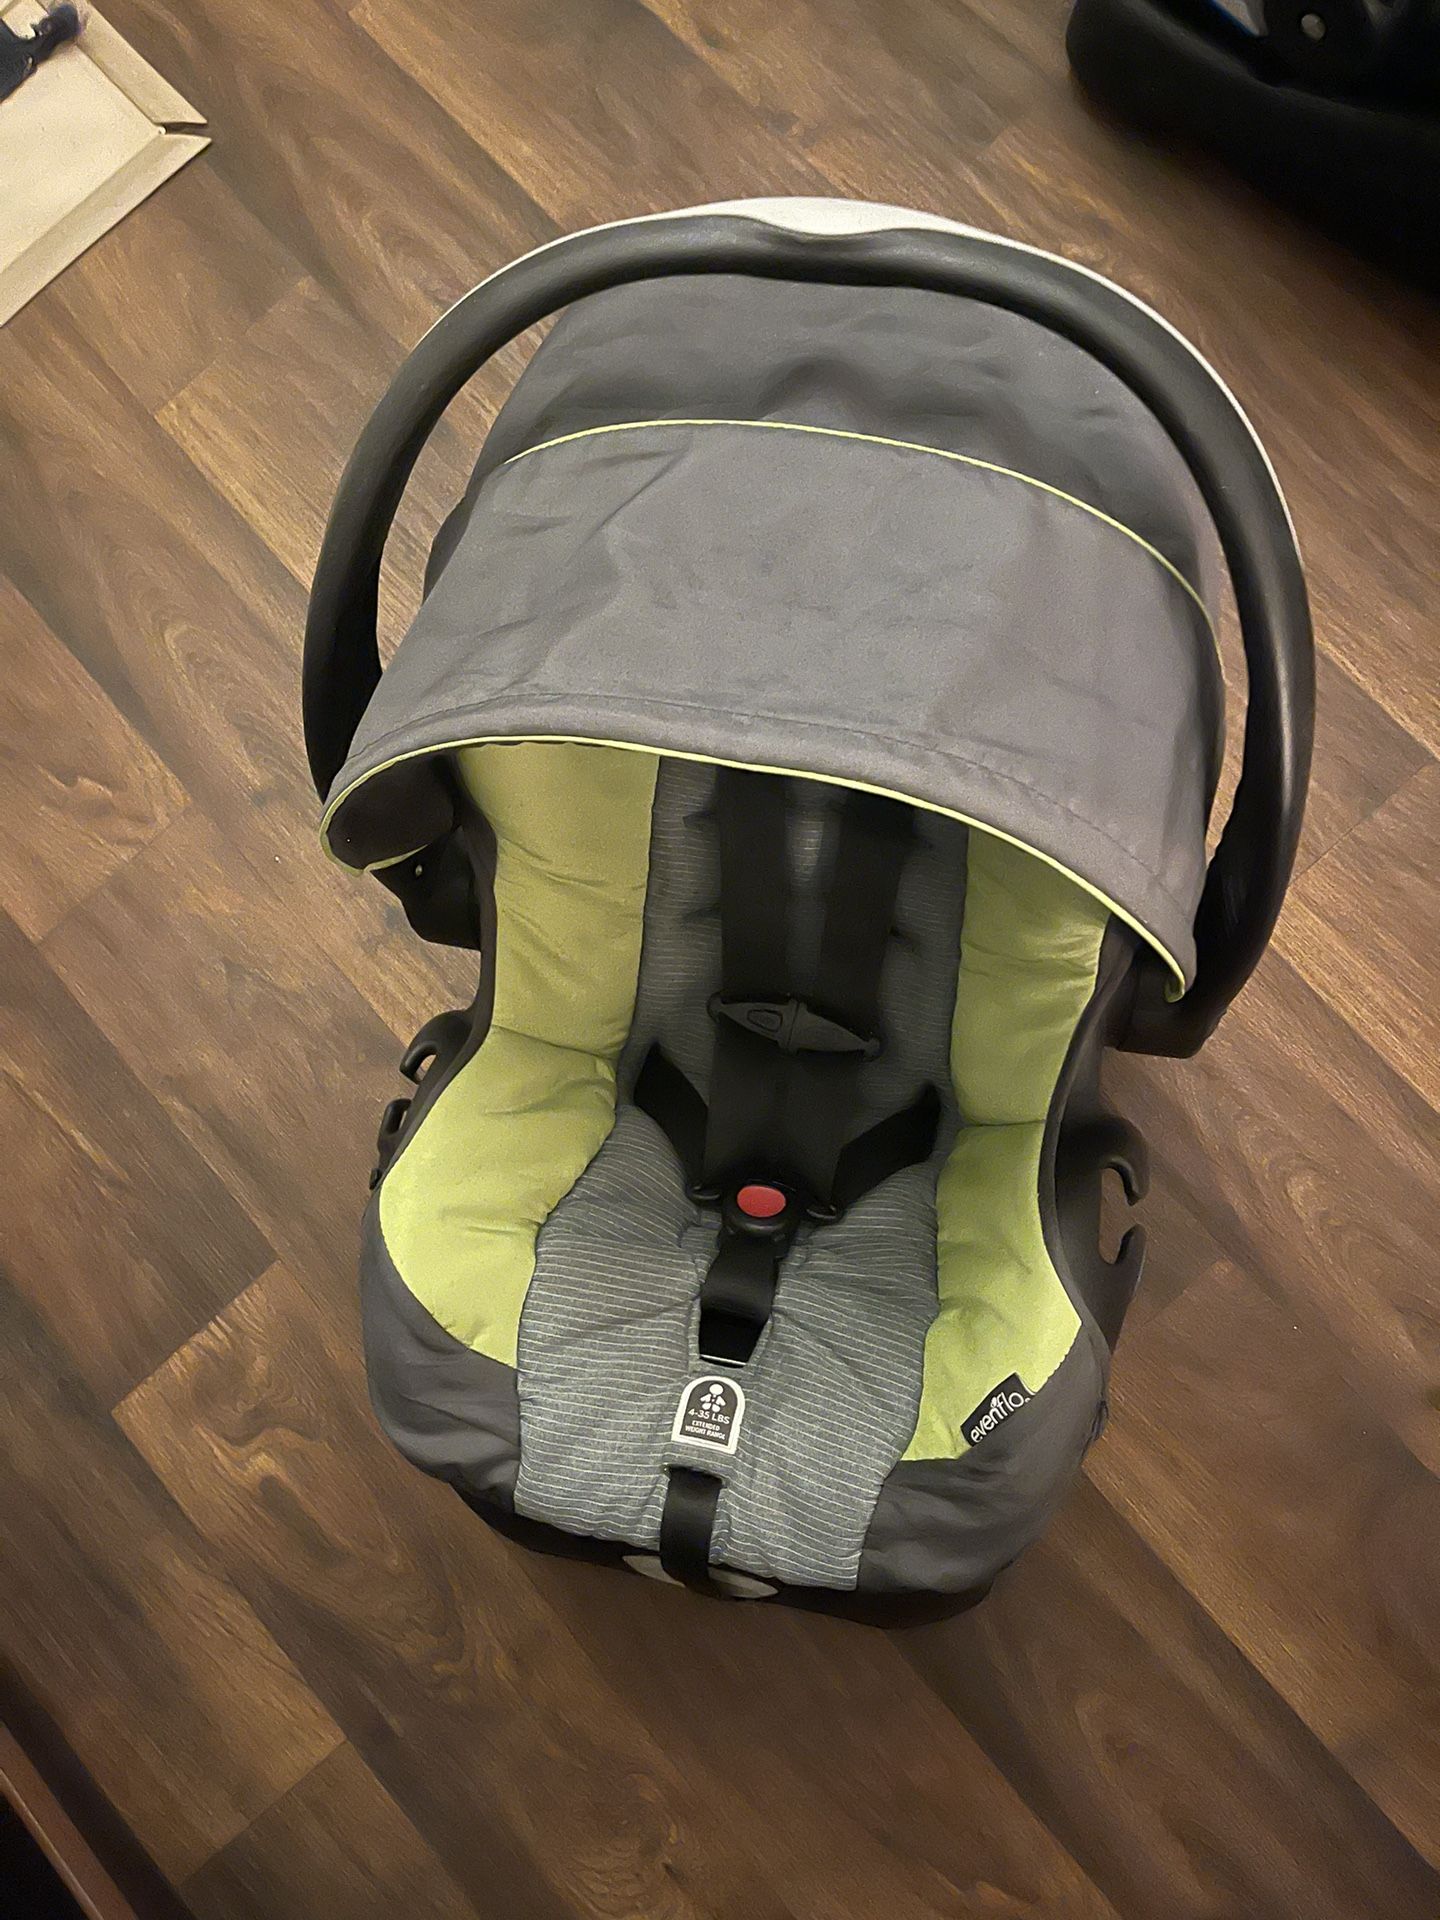 Evenflo-green infant car seat